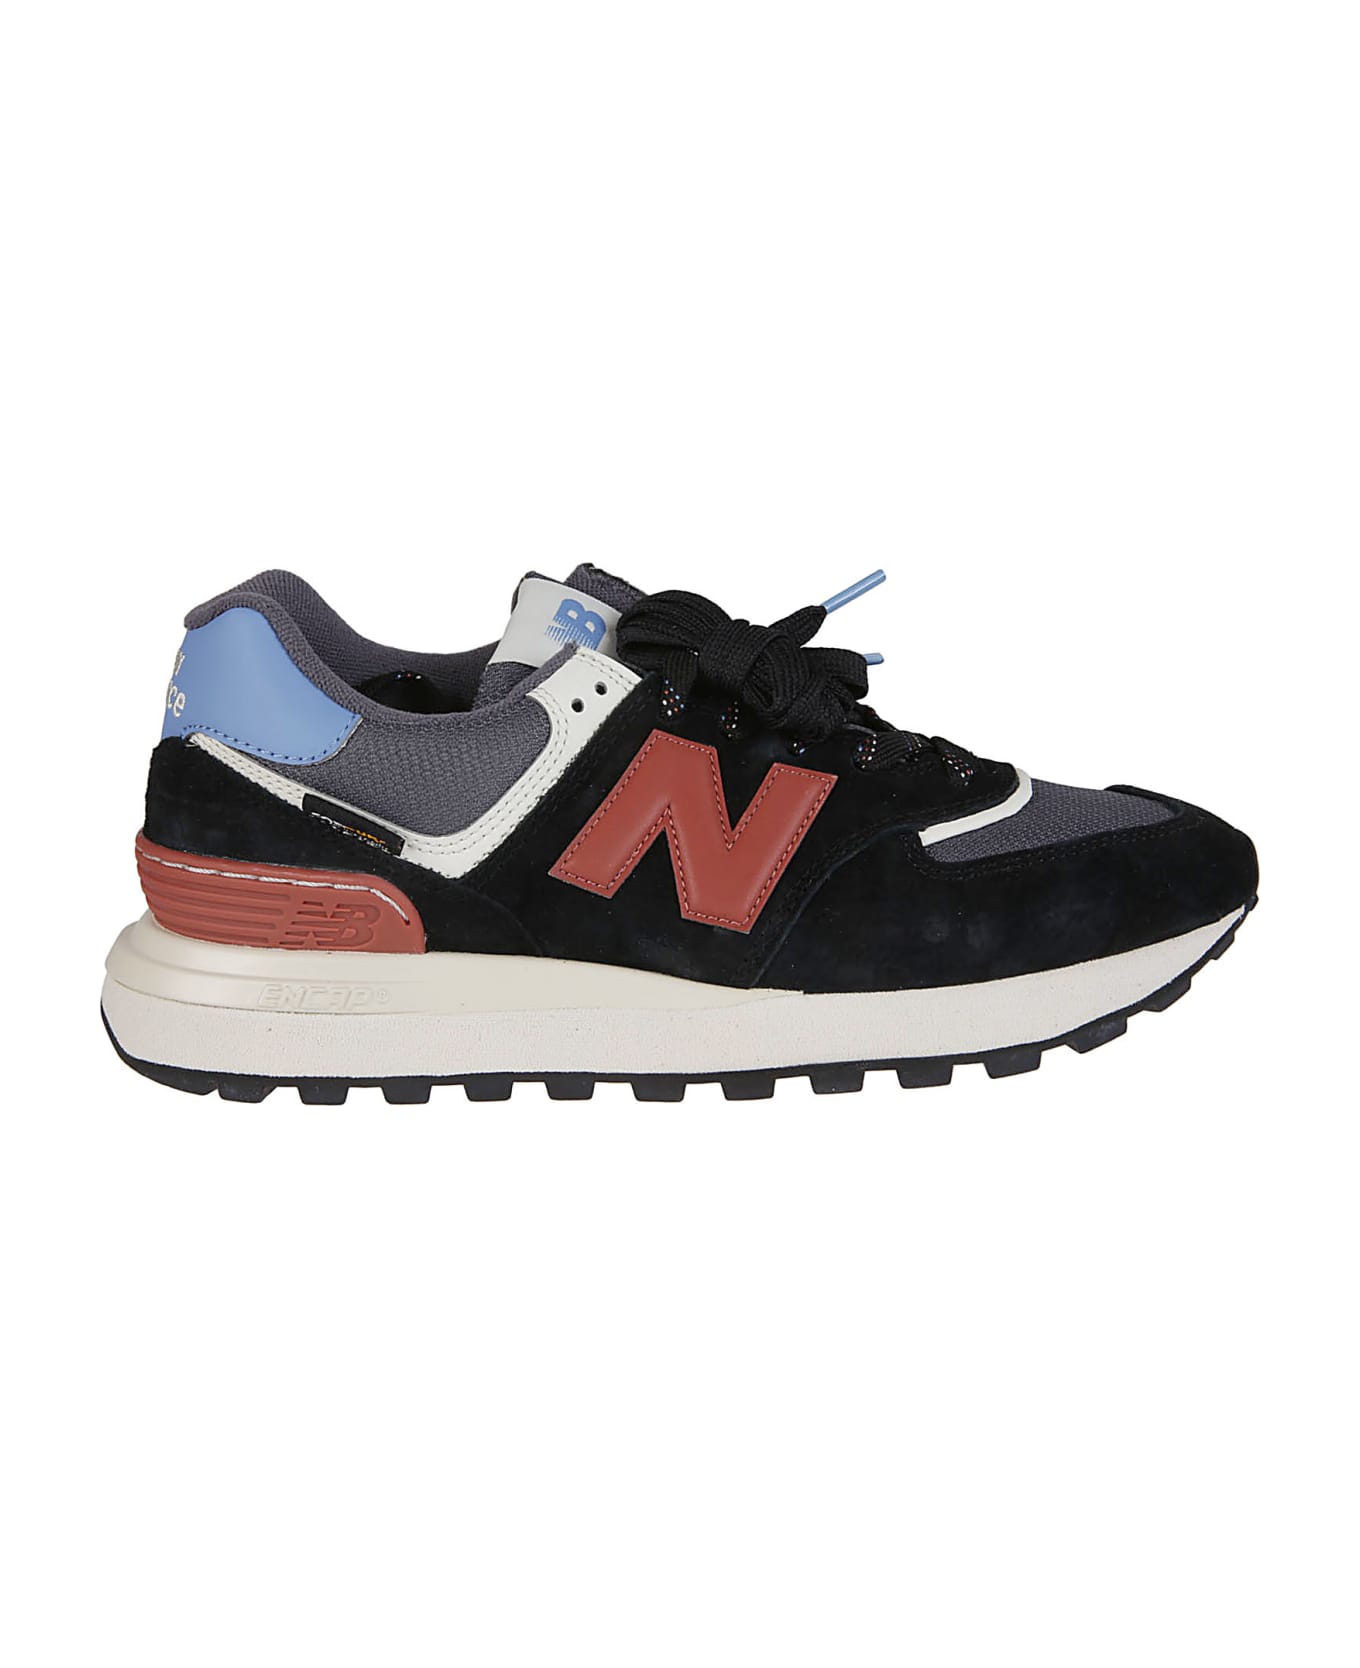 New Balance 574 Sneakers - Black スニーカー